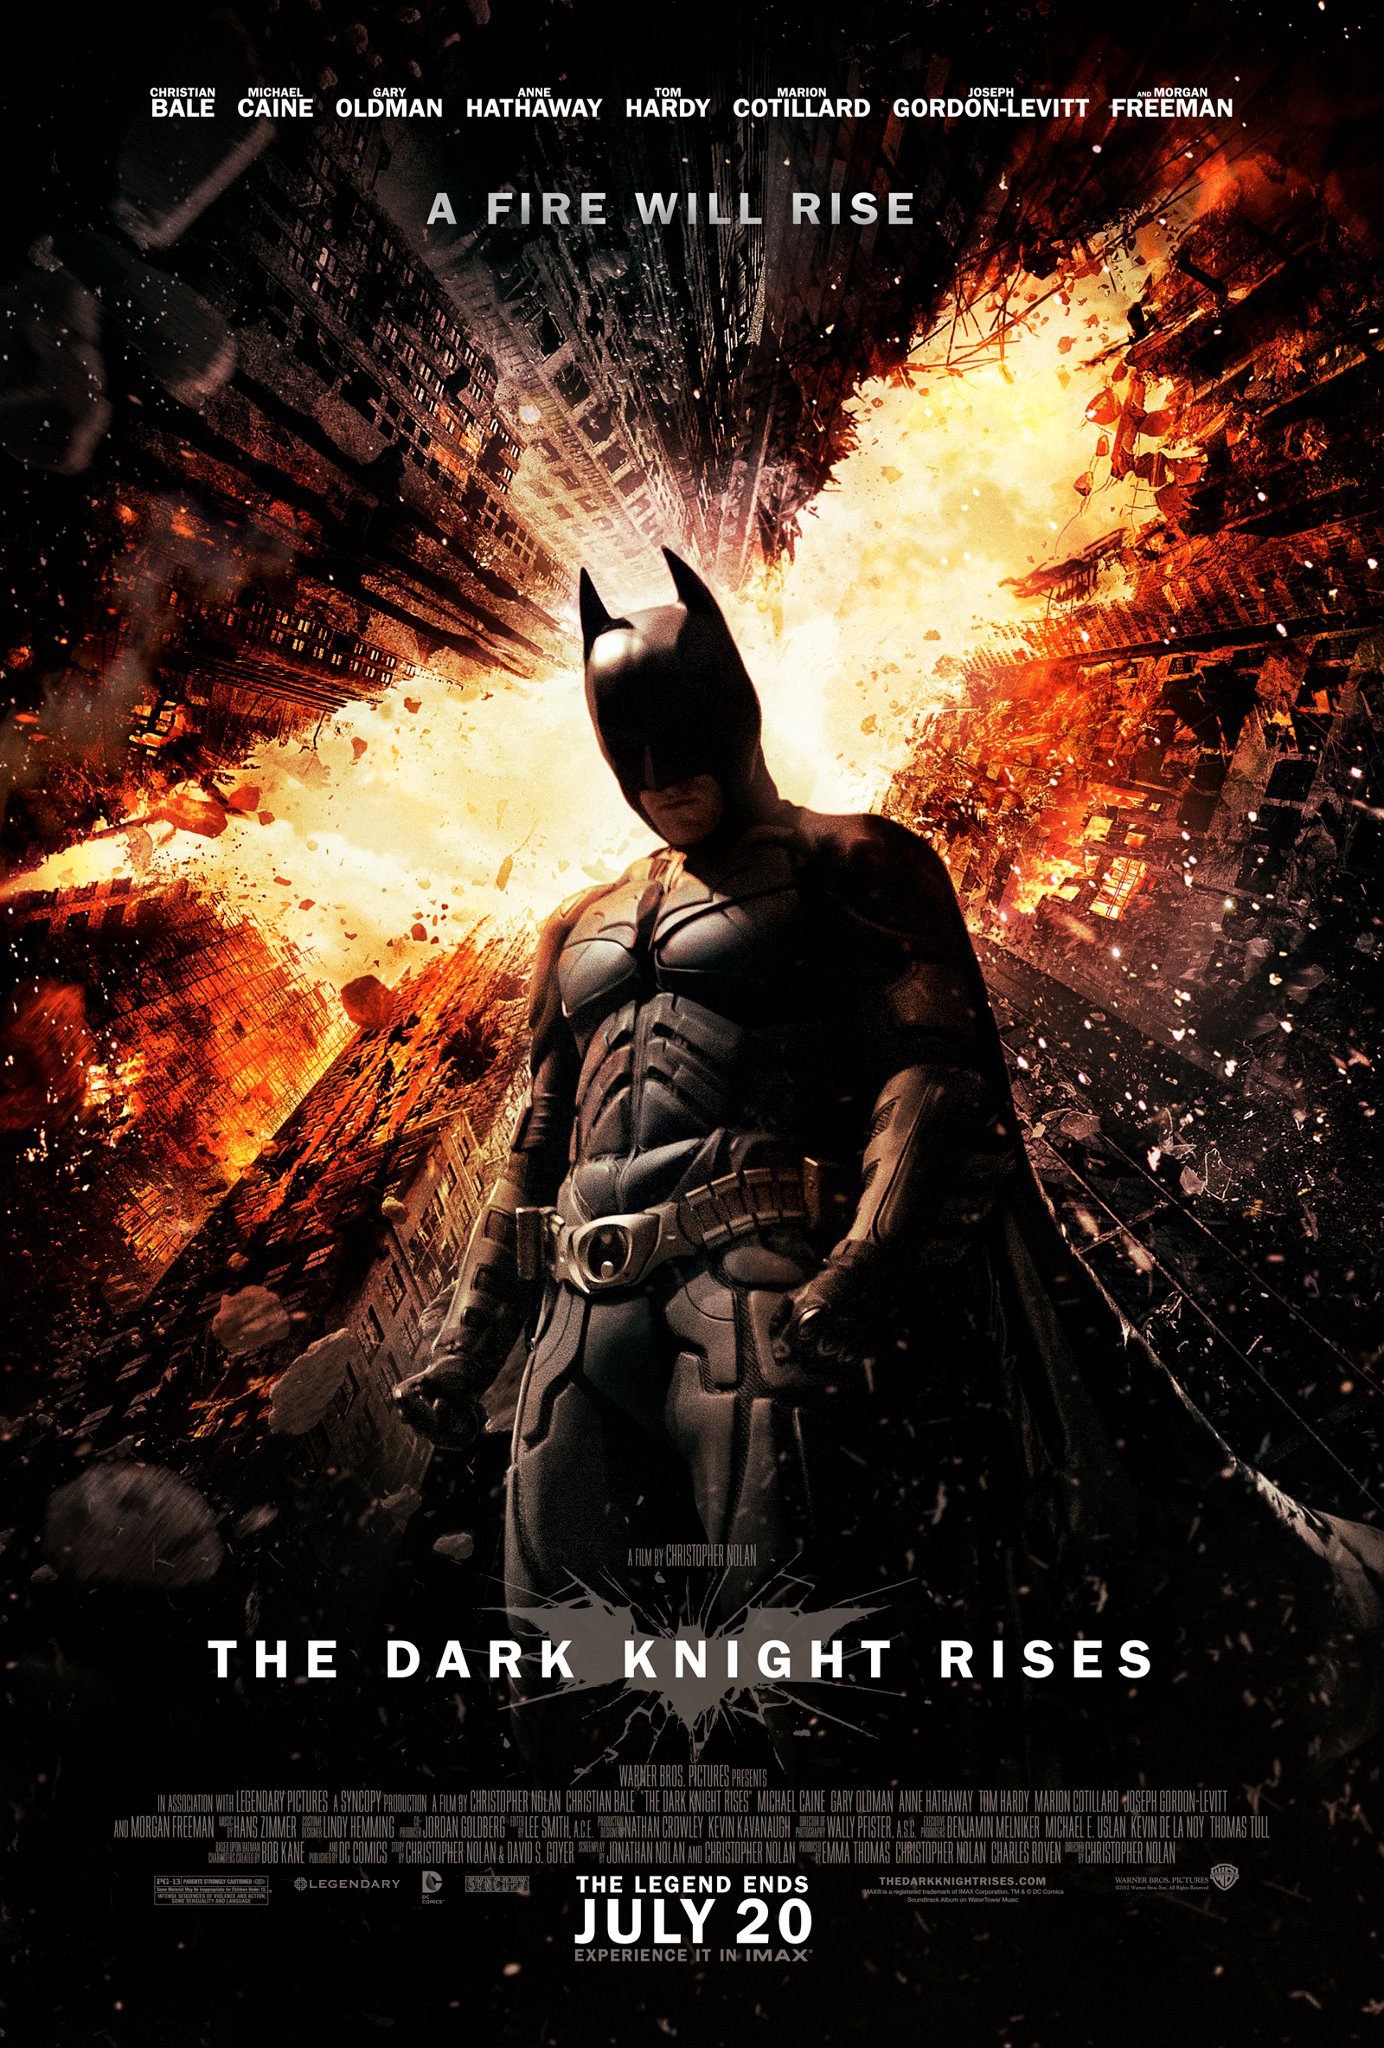 [DESCARGA][MEGAPOST - PELÍCULAS] Batman: The Dark Knight Saga - By Christopher Nolan (2005 - 2012) [HD 1080p] [Latino] [MEGA]   Affiche-the-dark-knight-rises